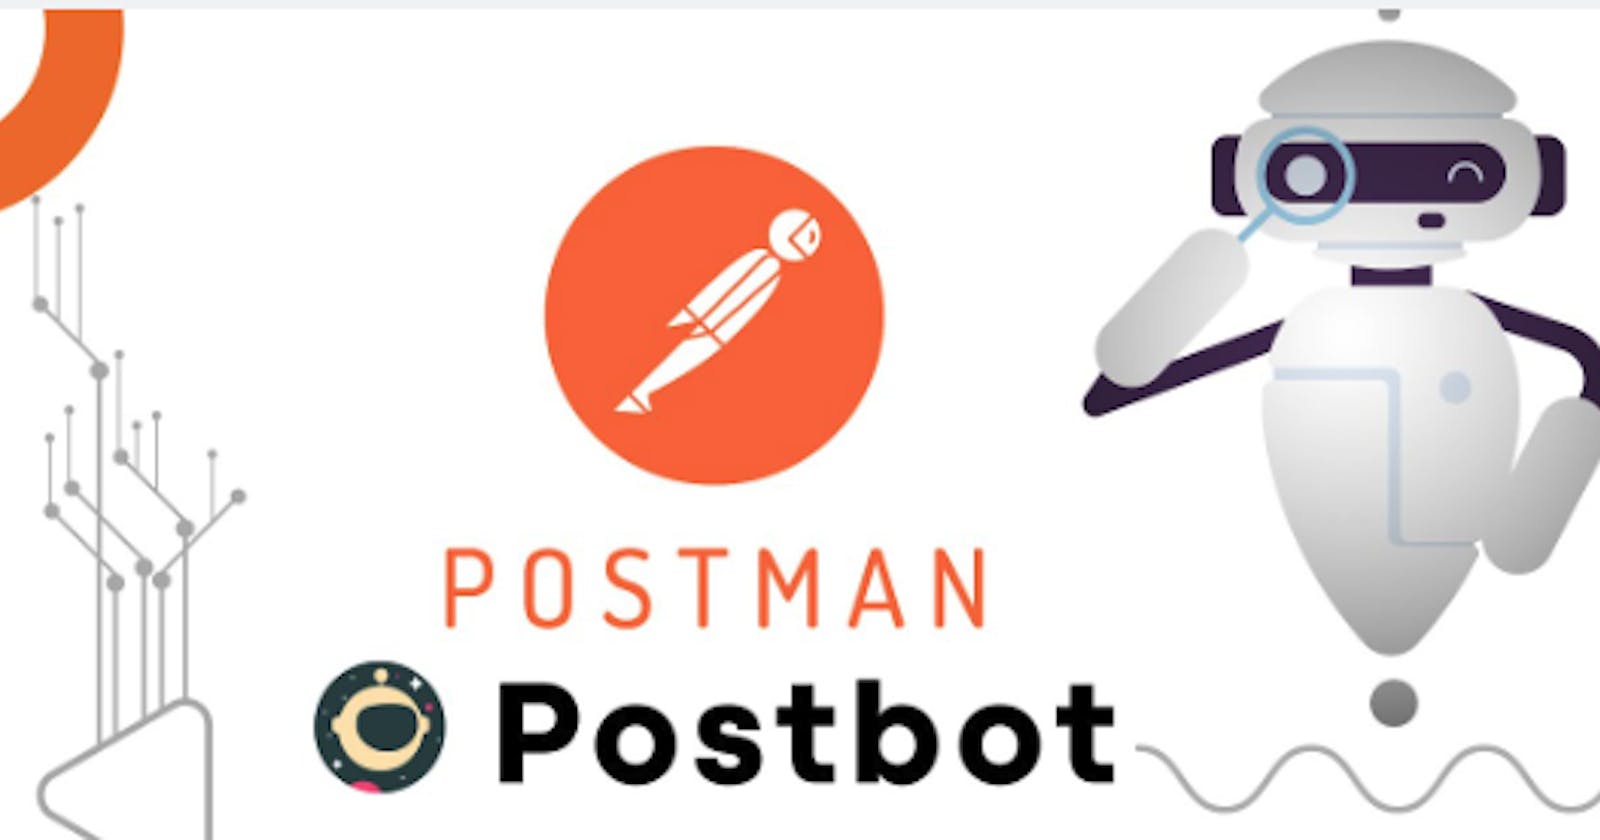 Postbot: Postman AI Assistant for API Testing